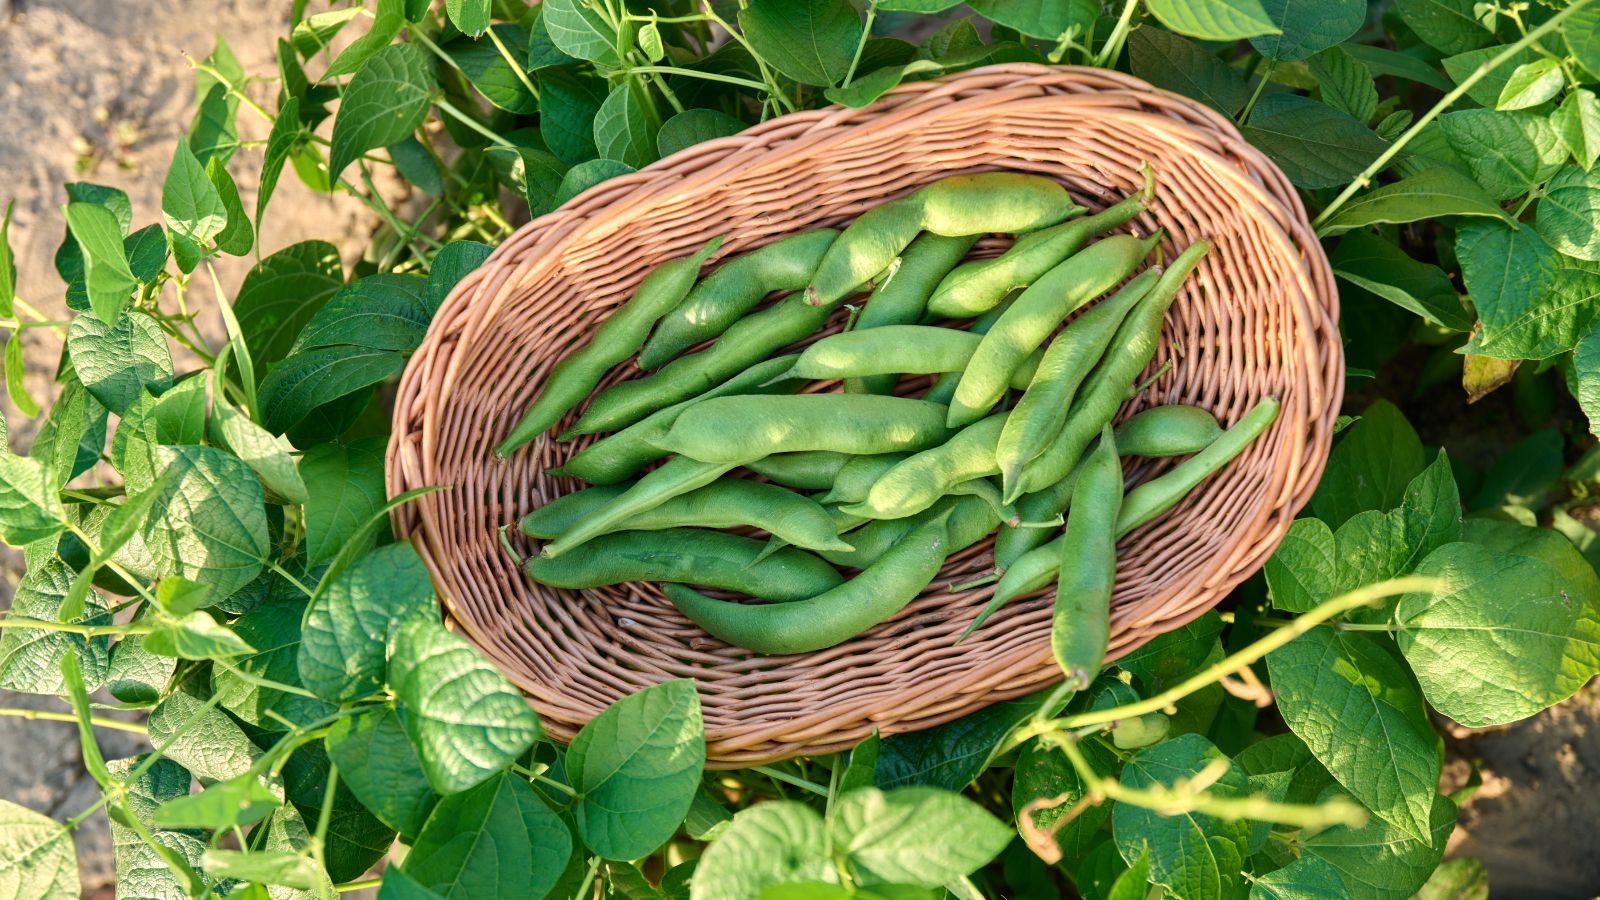 freshly harvested green beans placed inside a basket.